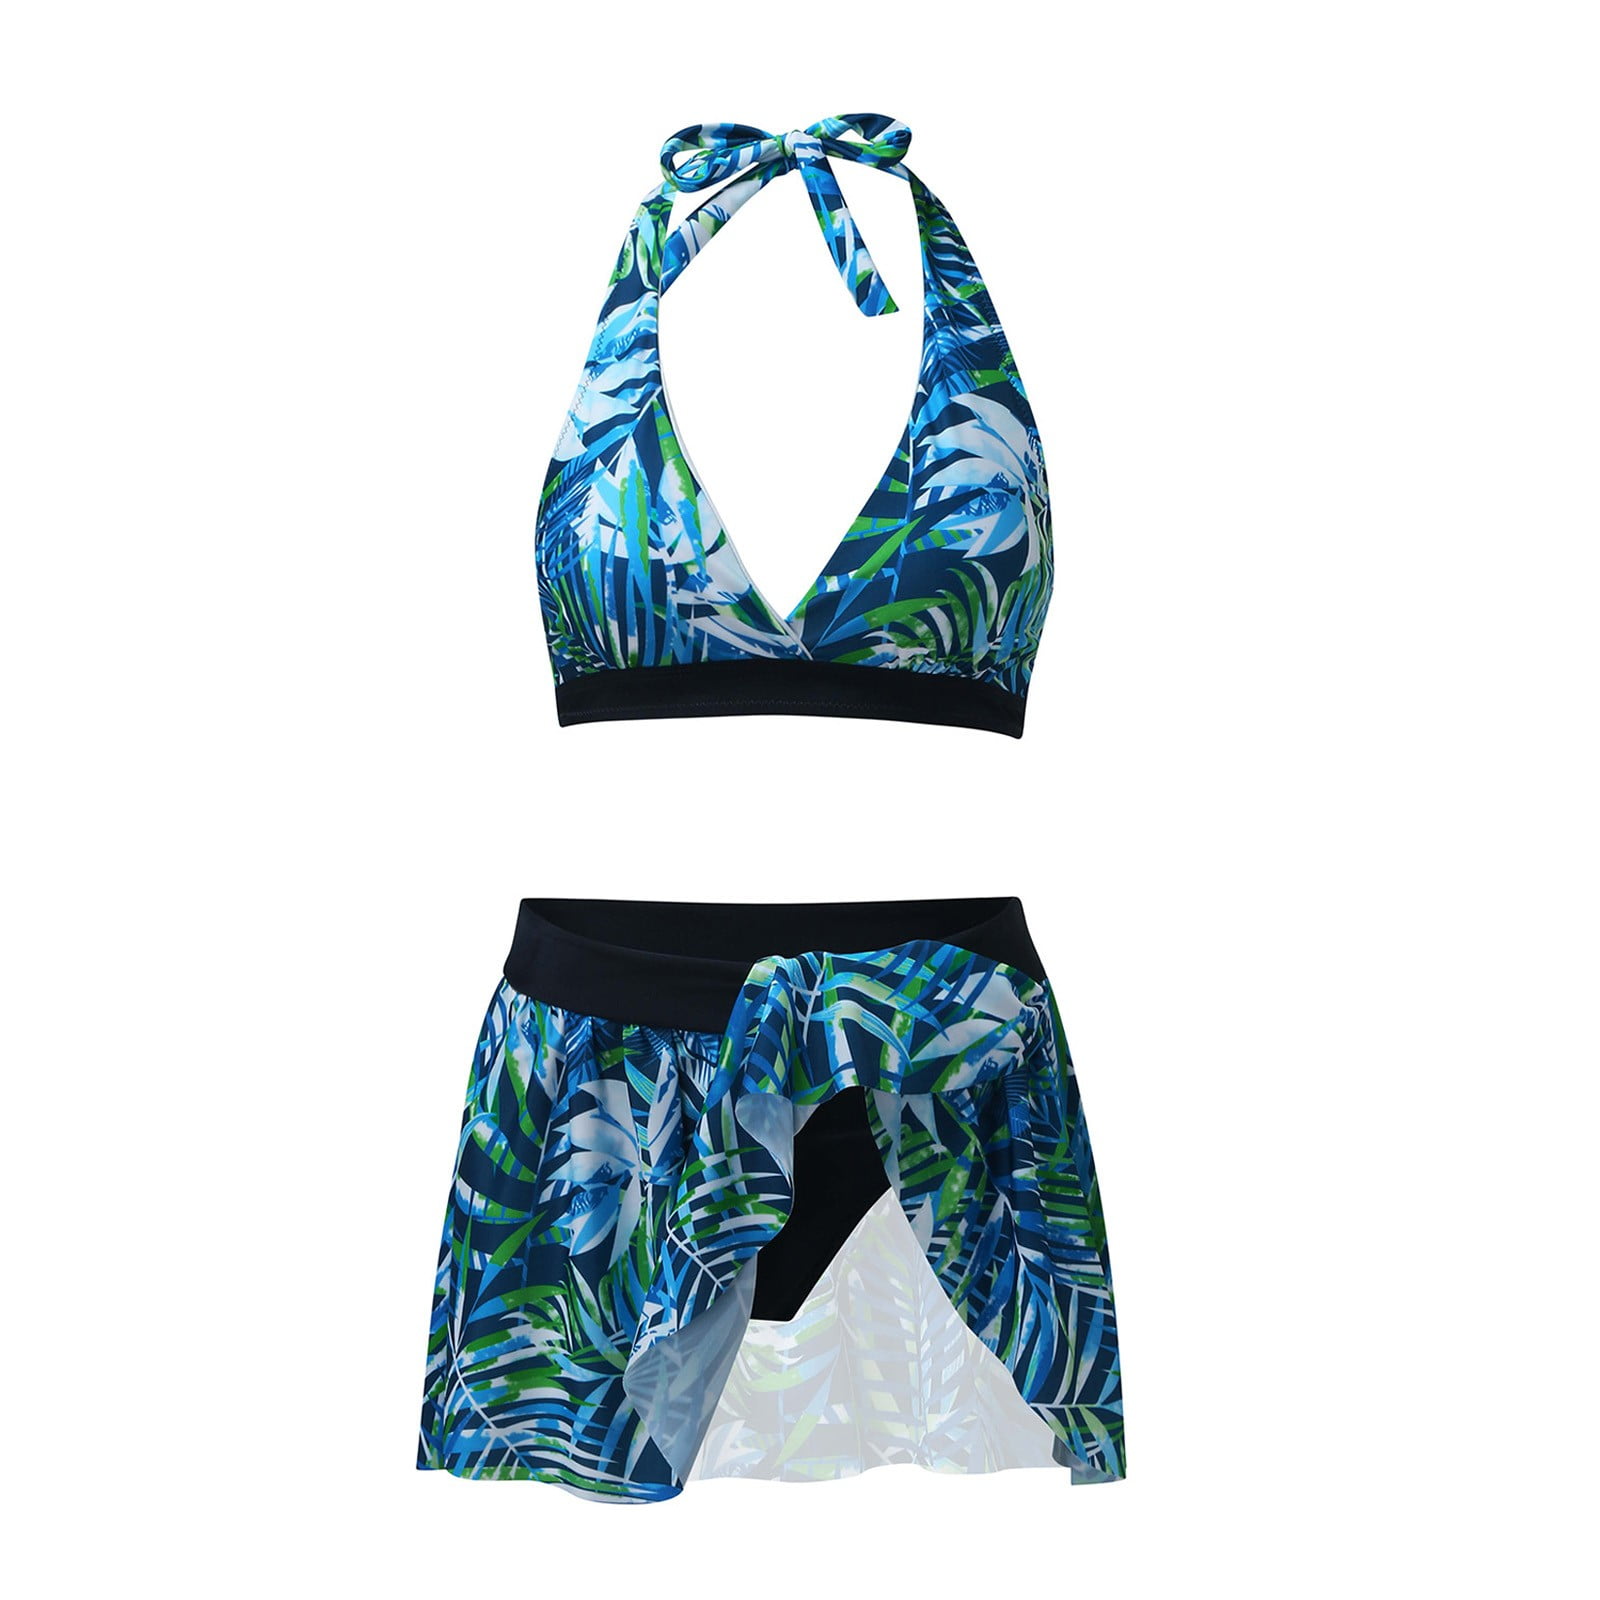 Flirtzy Teeny Micro Mini Thong and String Top Bikini Brazilian Swimwear Mini  Bikini Swimsuit G-String, One Size, Lime Green 